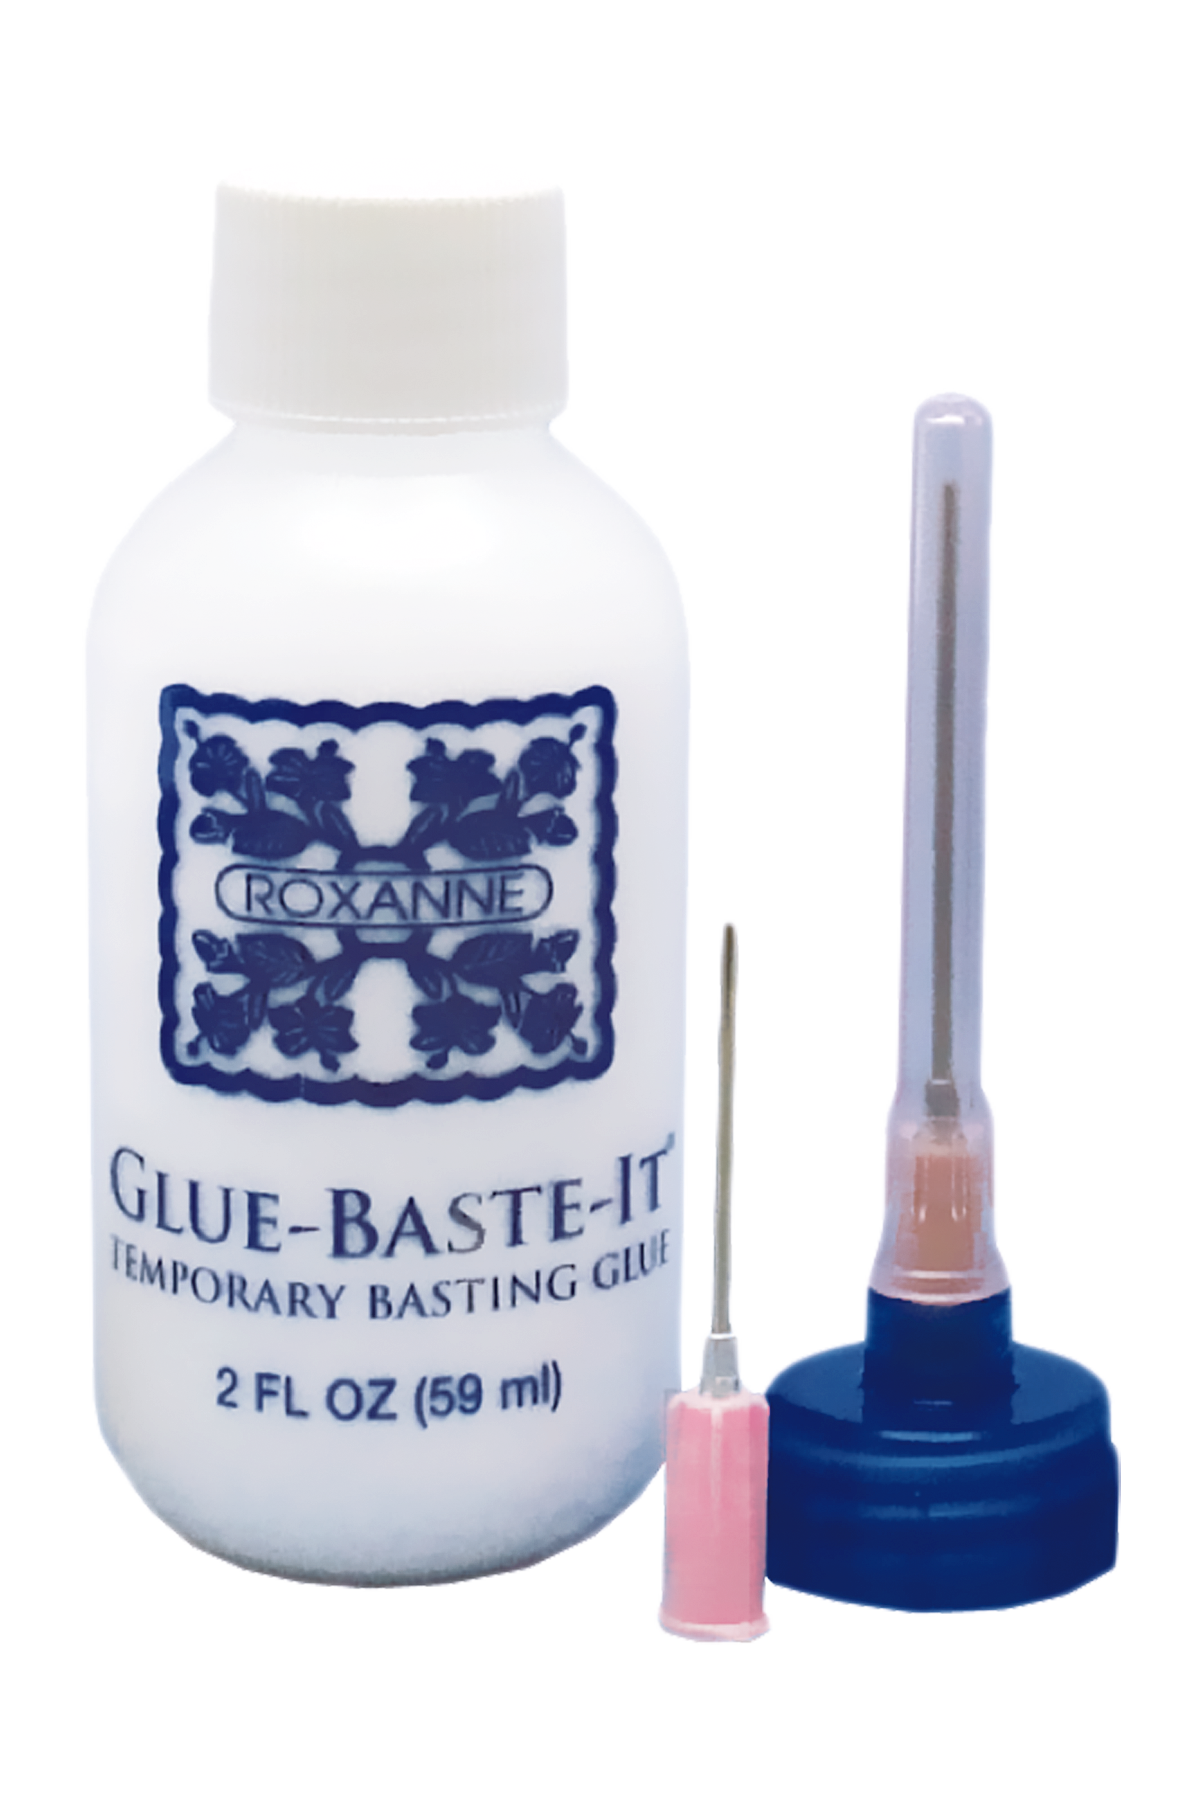  Roxanne Glue Baste It, 2-Ounce Temporary Basting Glue